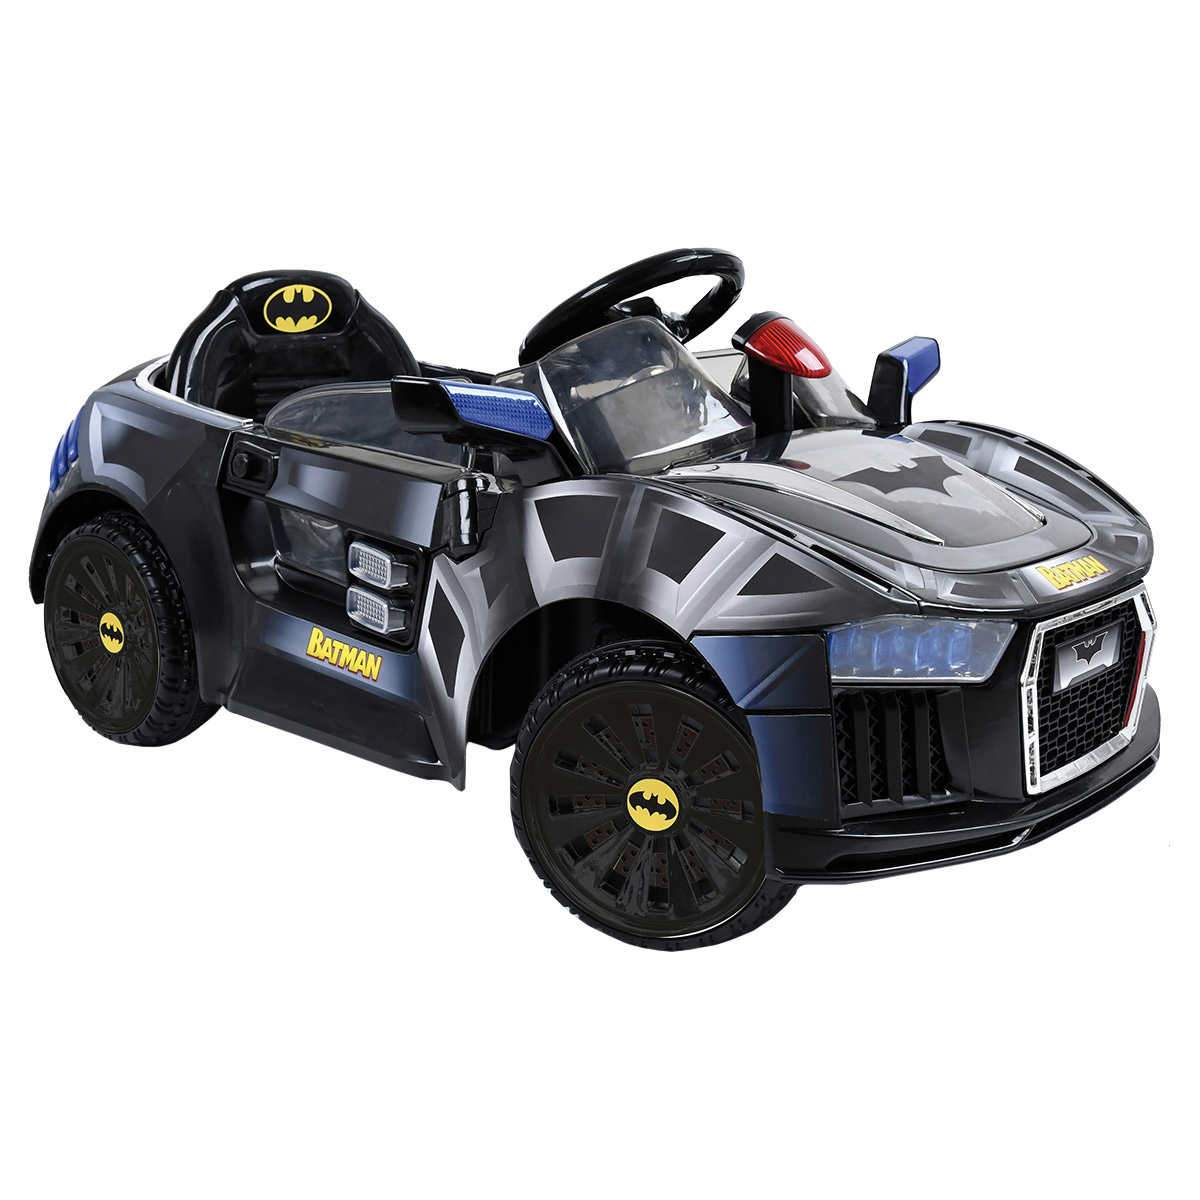 Batman E-Cruiser Ride-On Car-Best Batman Toys for Kids